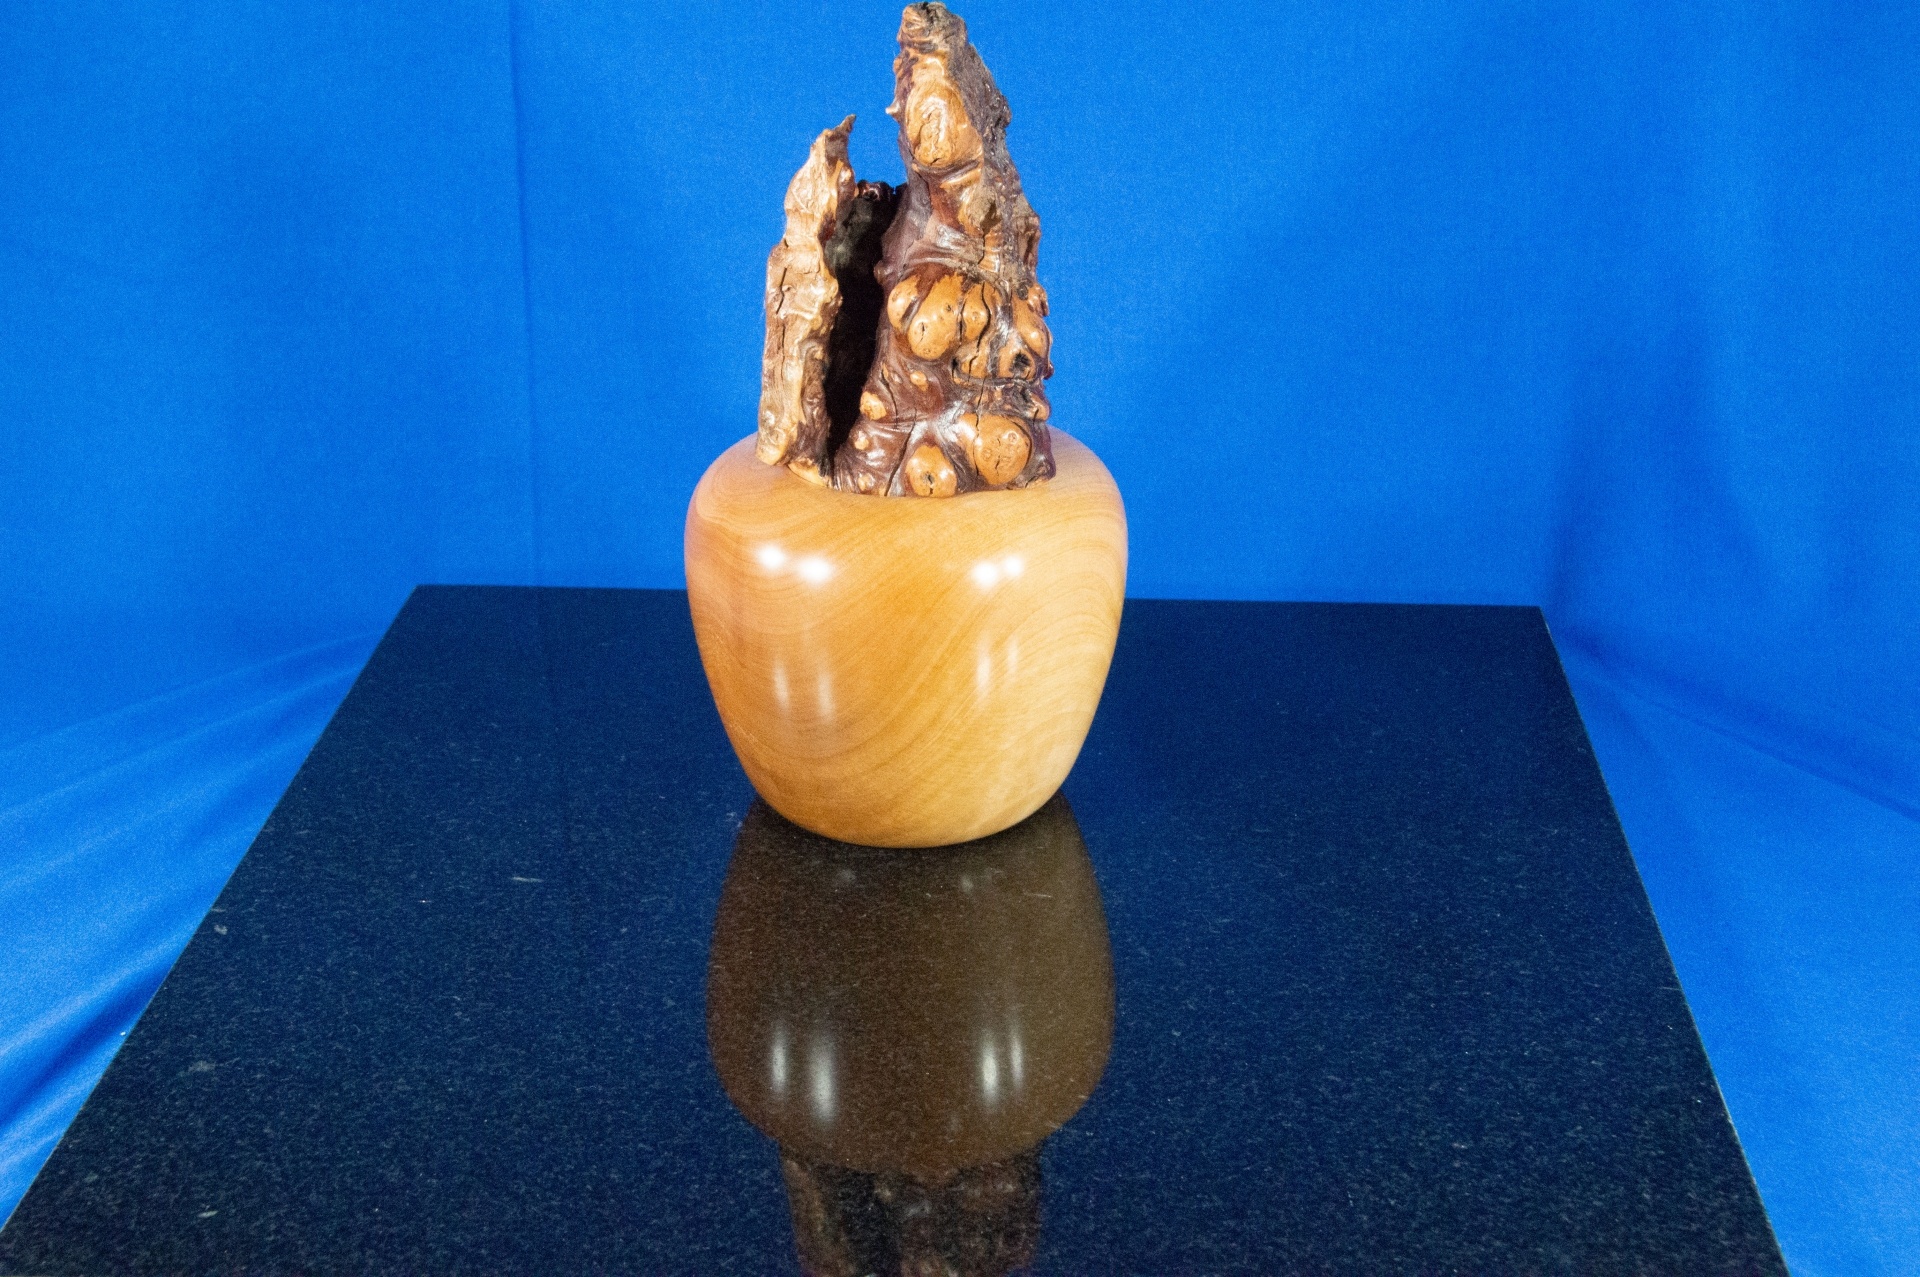 Mandrone vase with Manzanita flame top